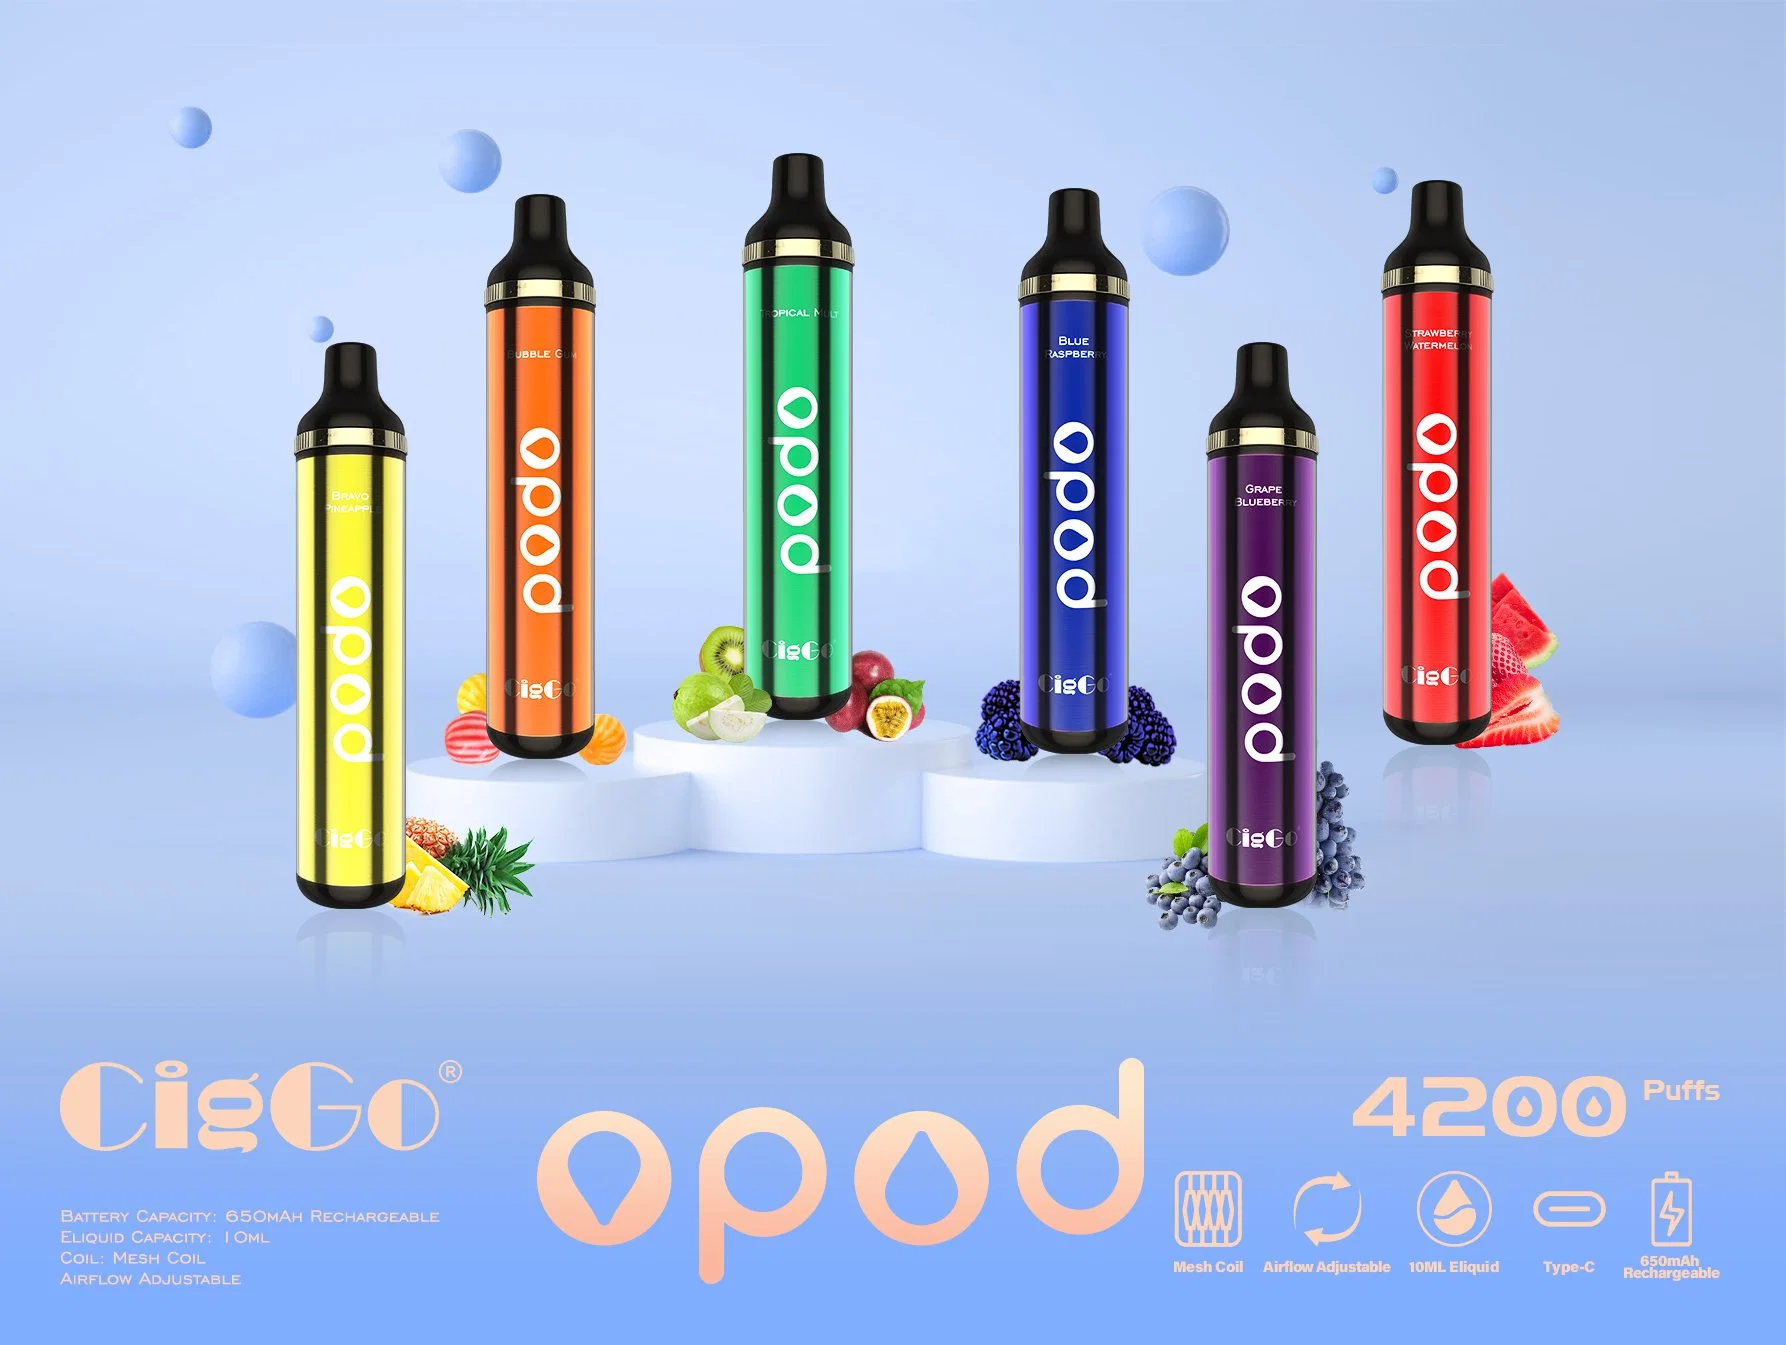 Ciggo Opod 4200 Puffs Disposable Ecig Starter Kits